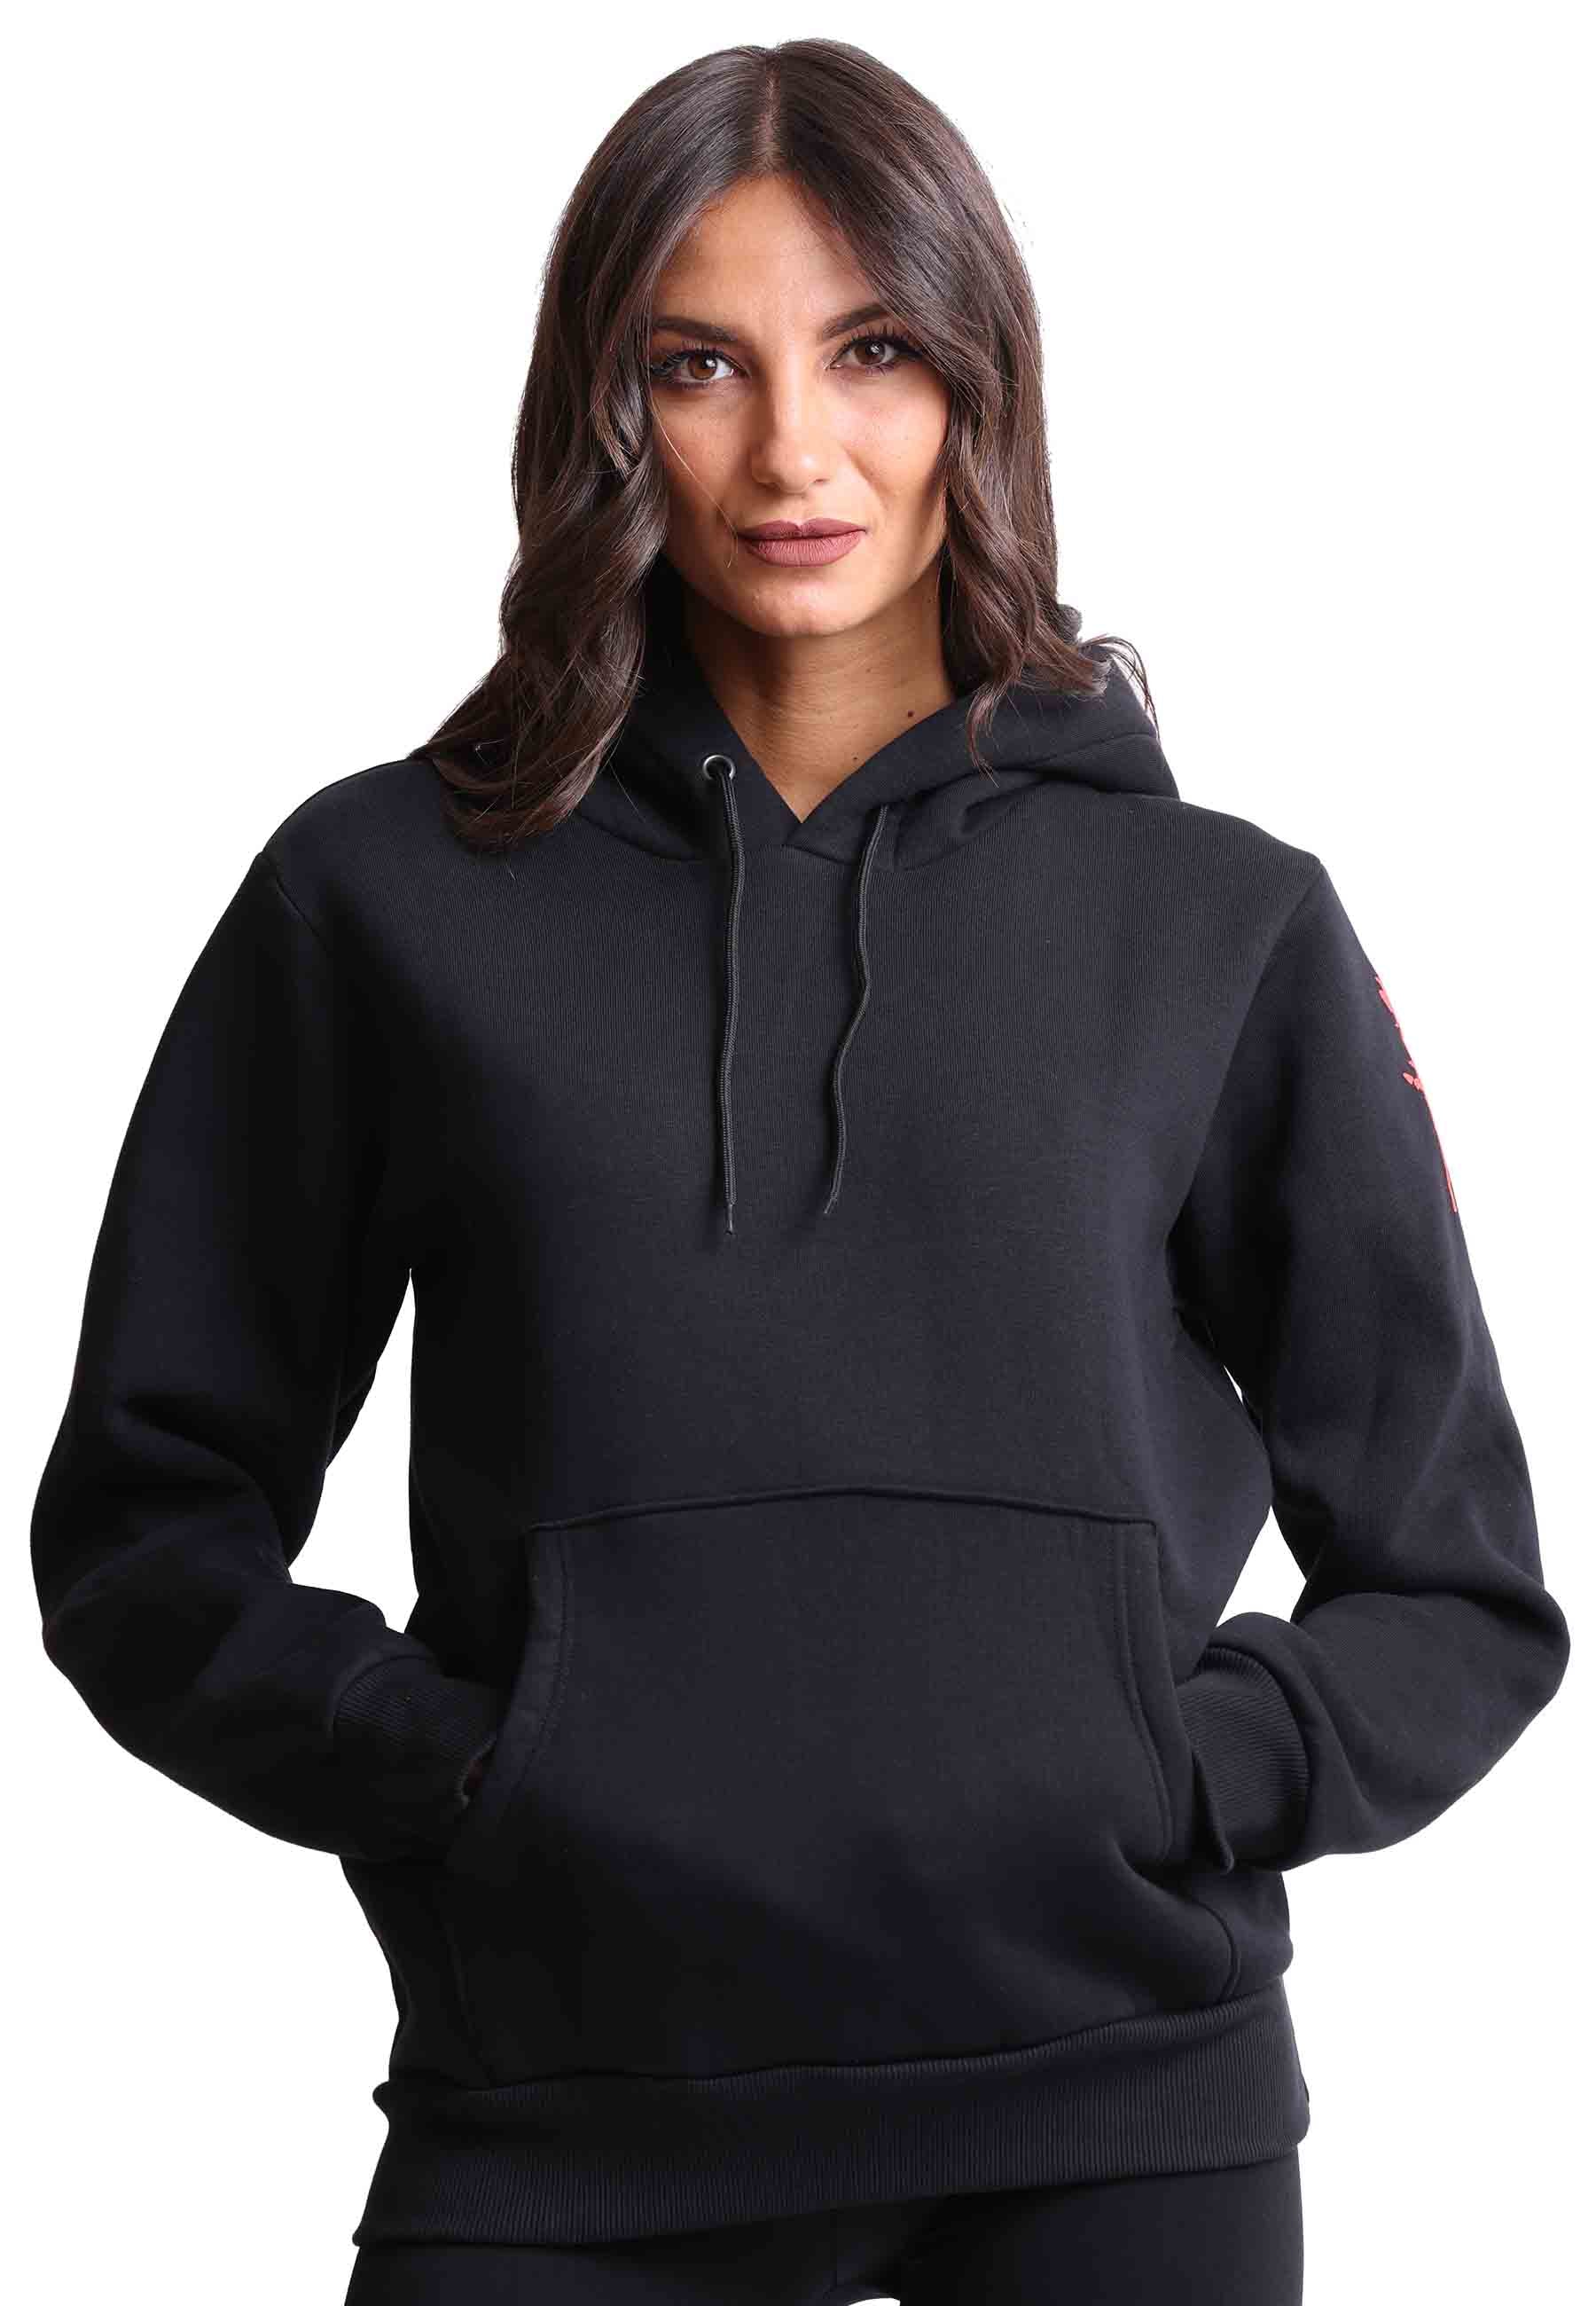 Women's hooded sweatshirt in black fabric and silk print